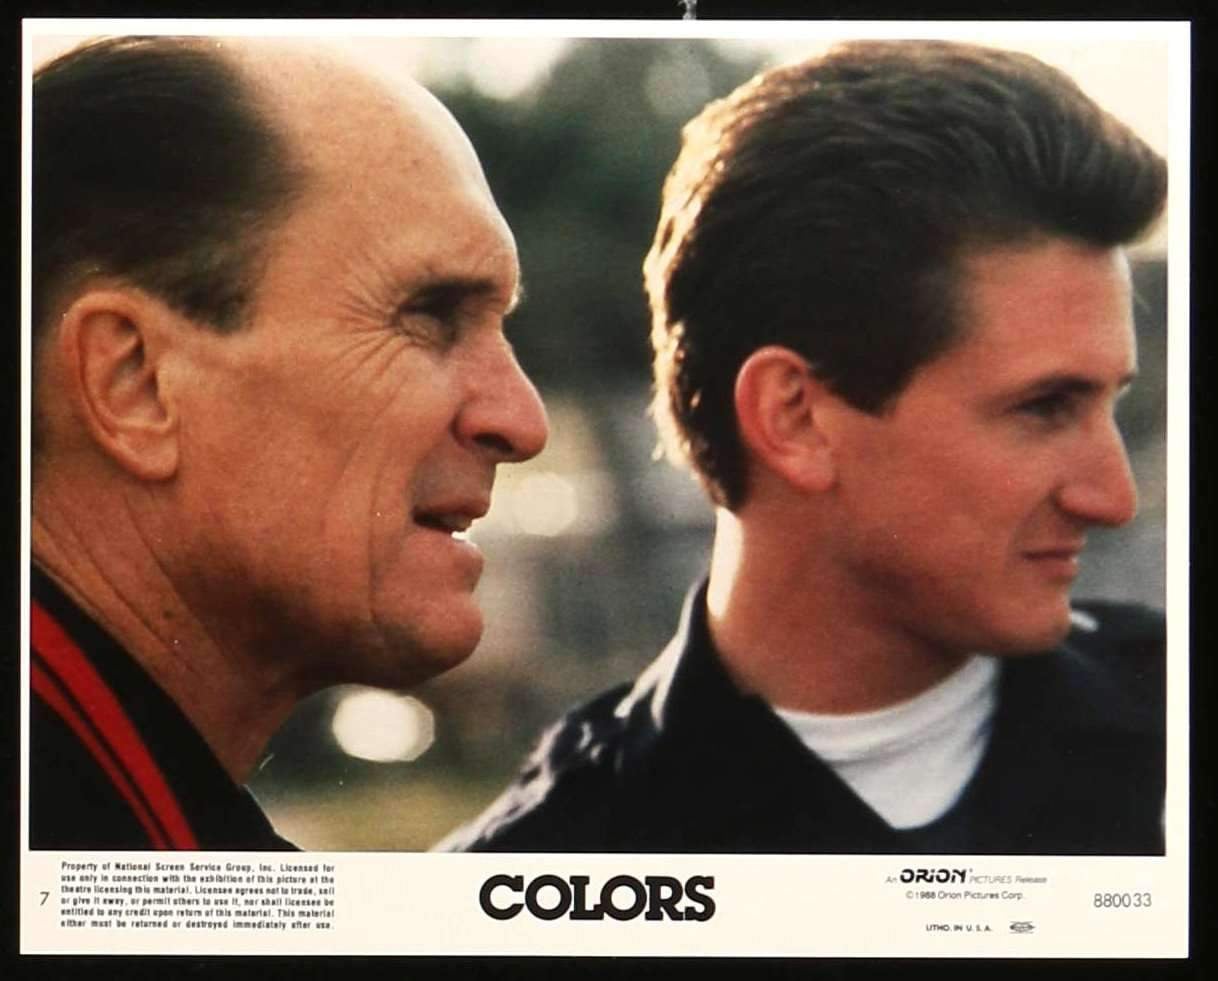 Colors (1988) Movie Still Photos - Set of 8 original movie poster for sale at Original Film Art